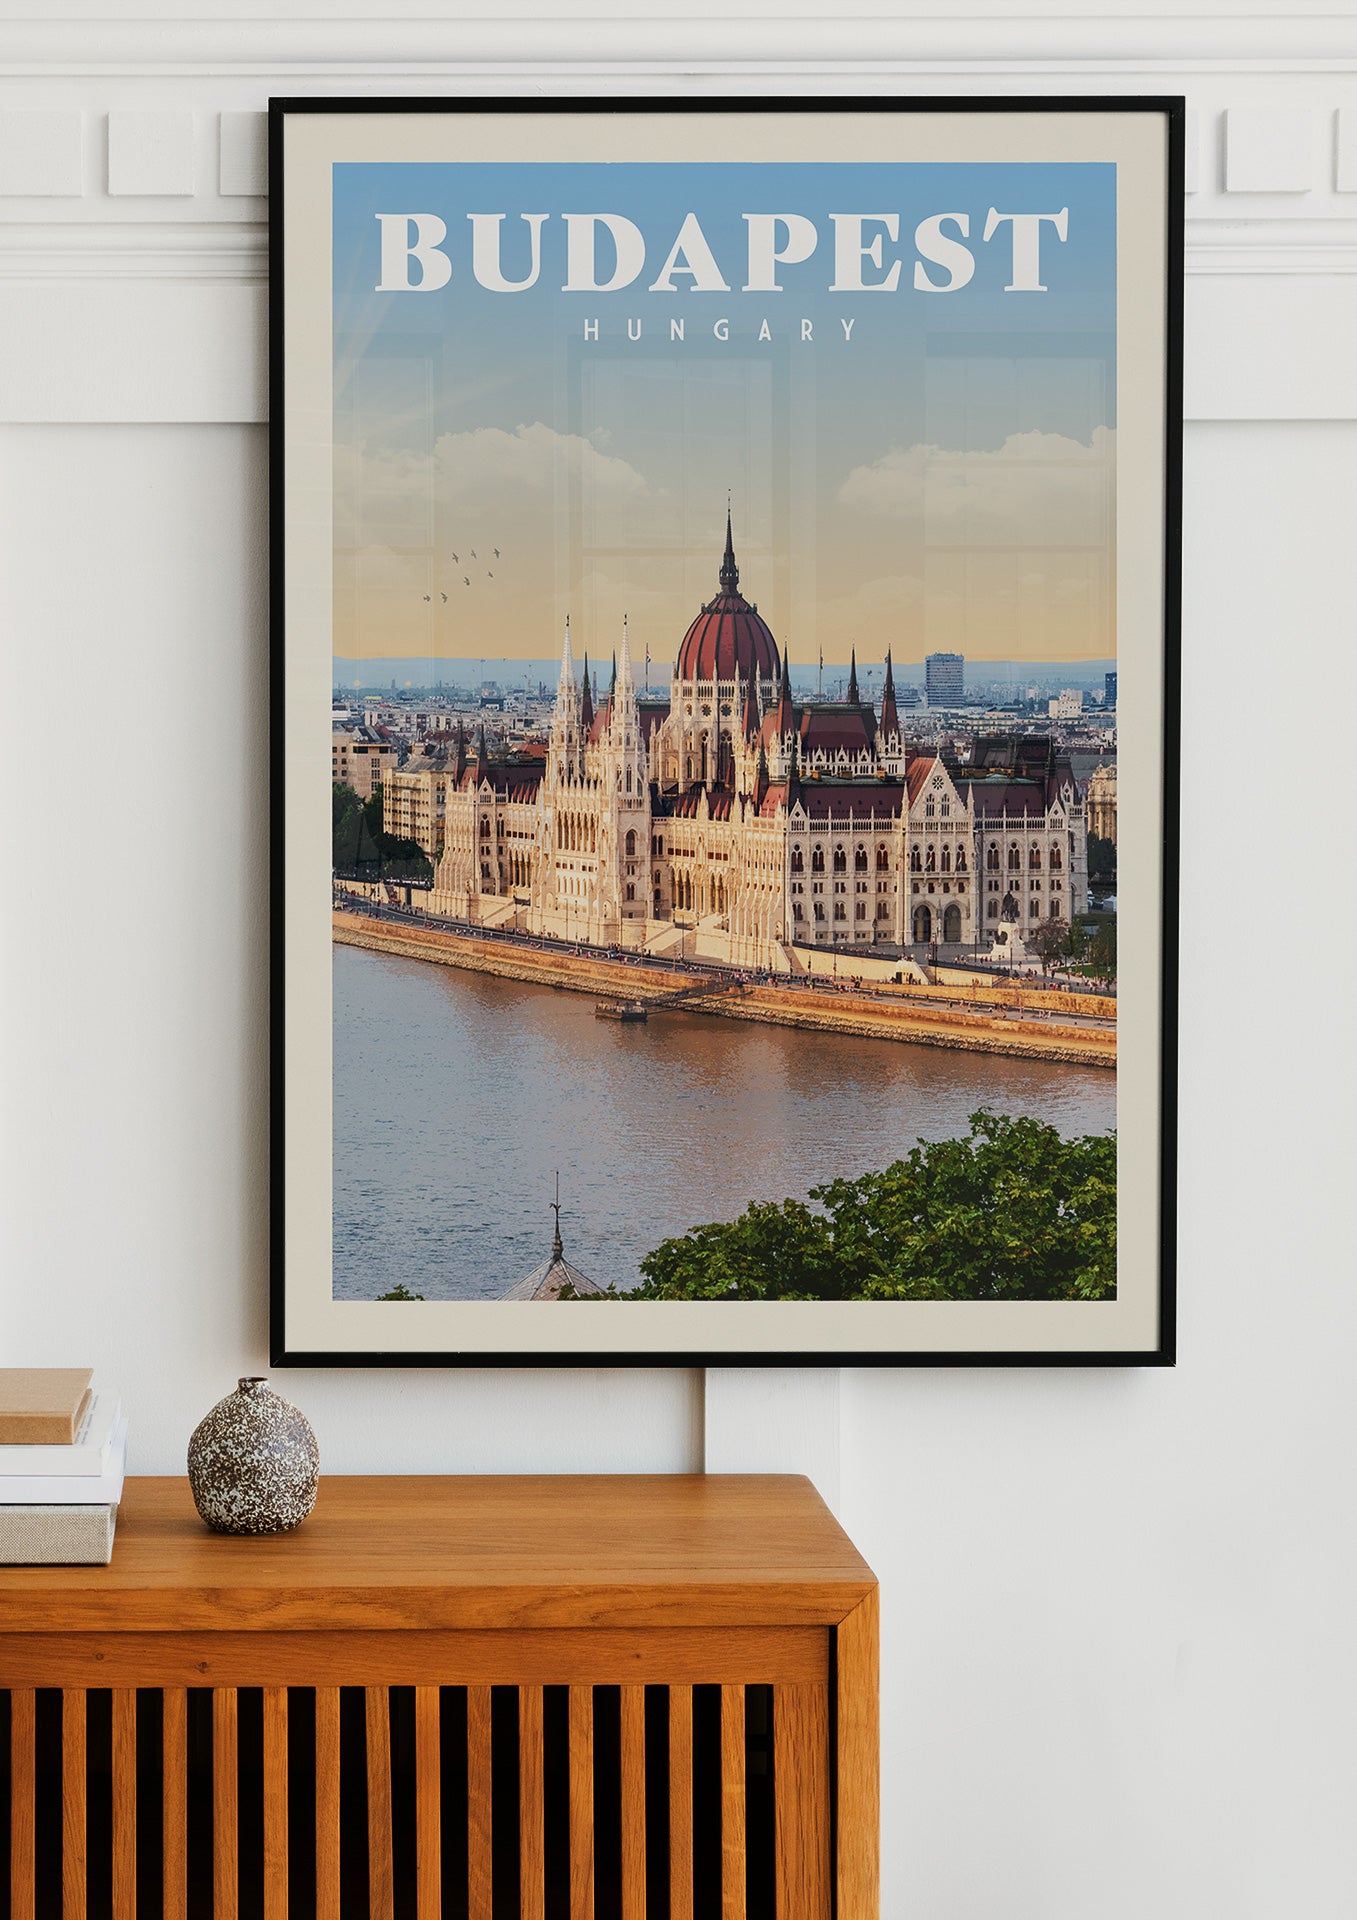 Budapest, Hungary - Vintage Travel Poster